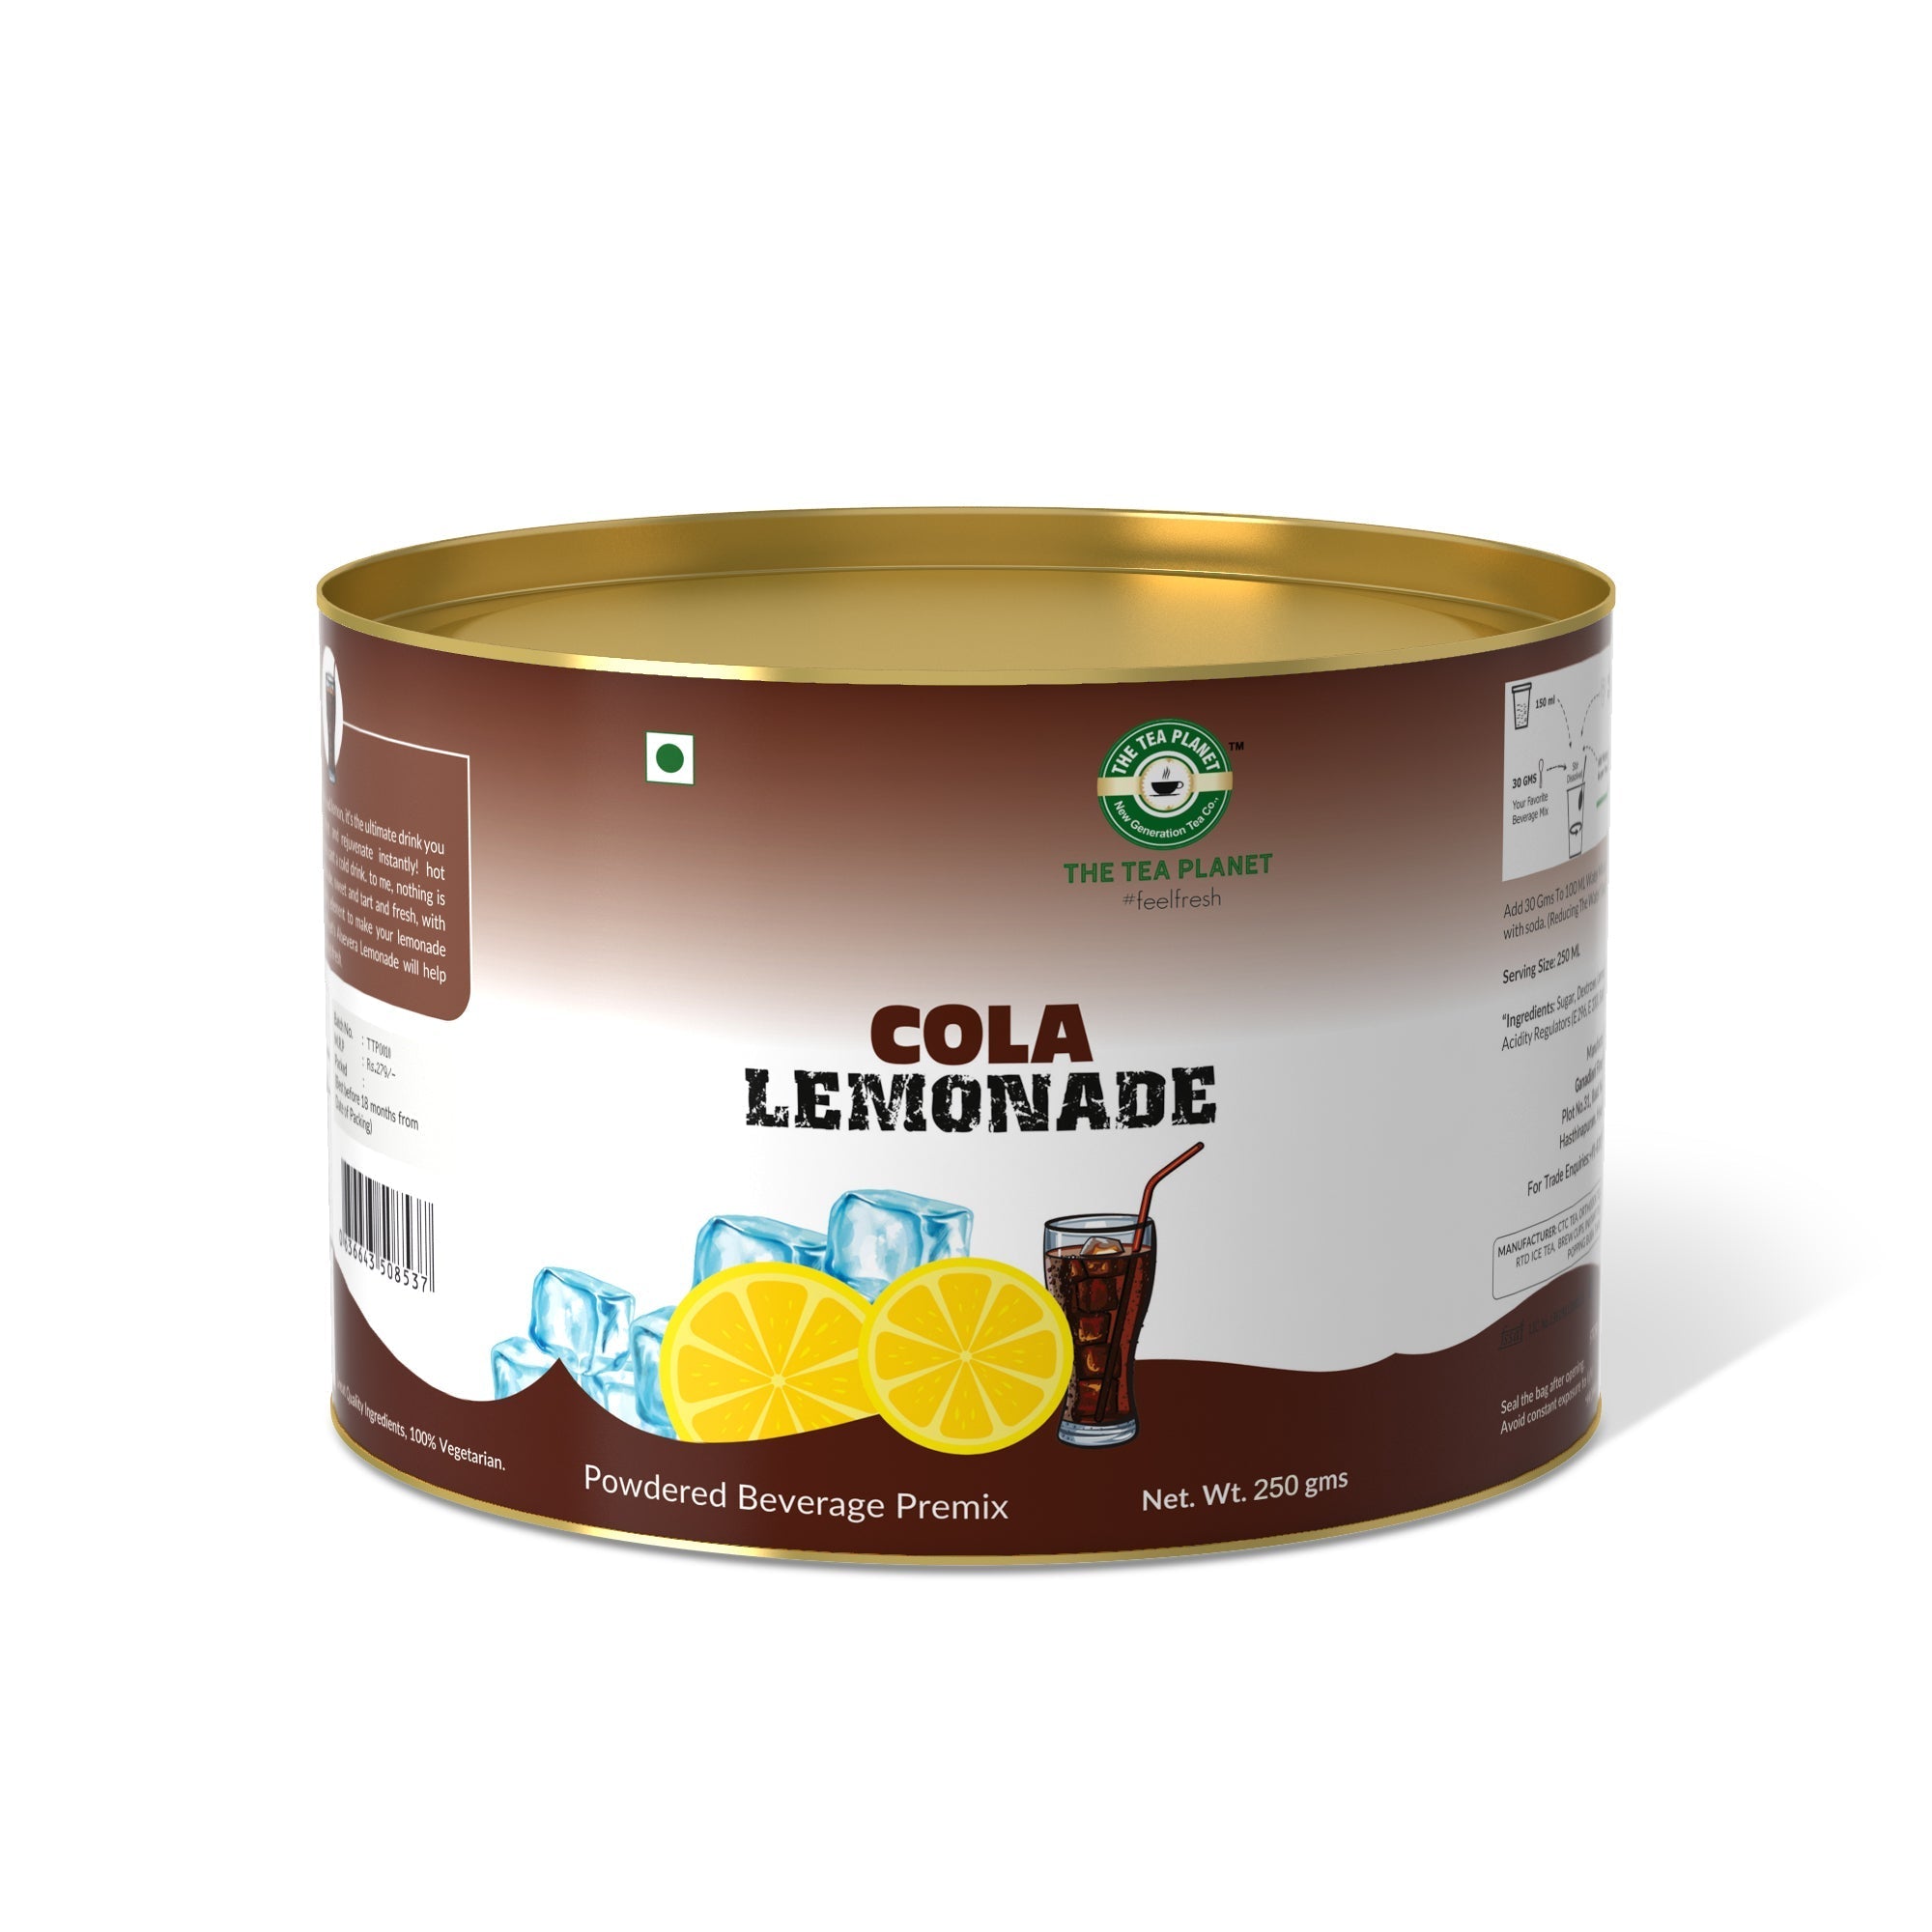 Cola Lemonade Premix - 800 gms